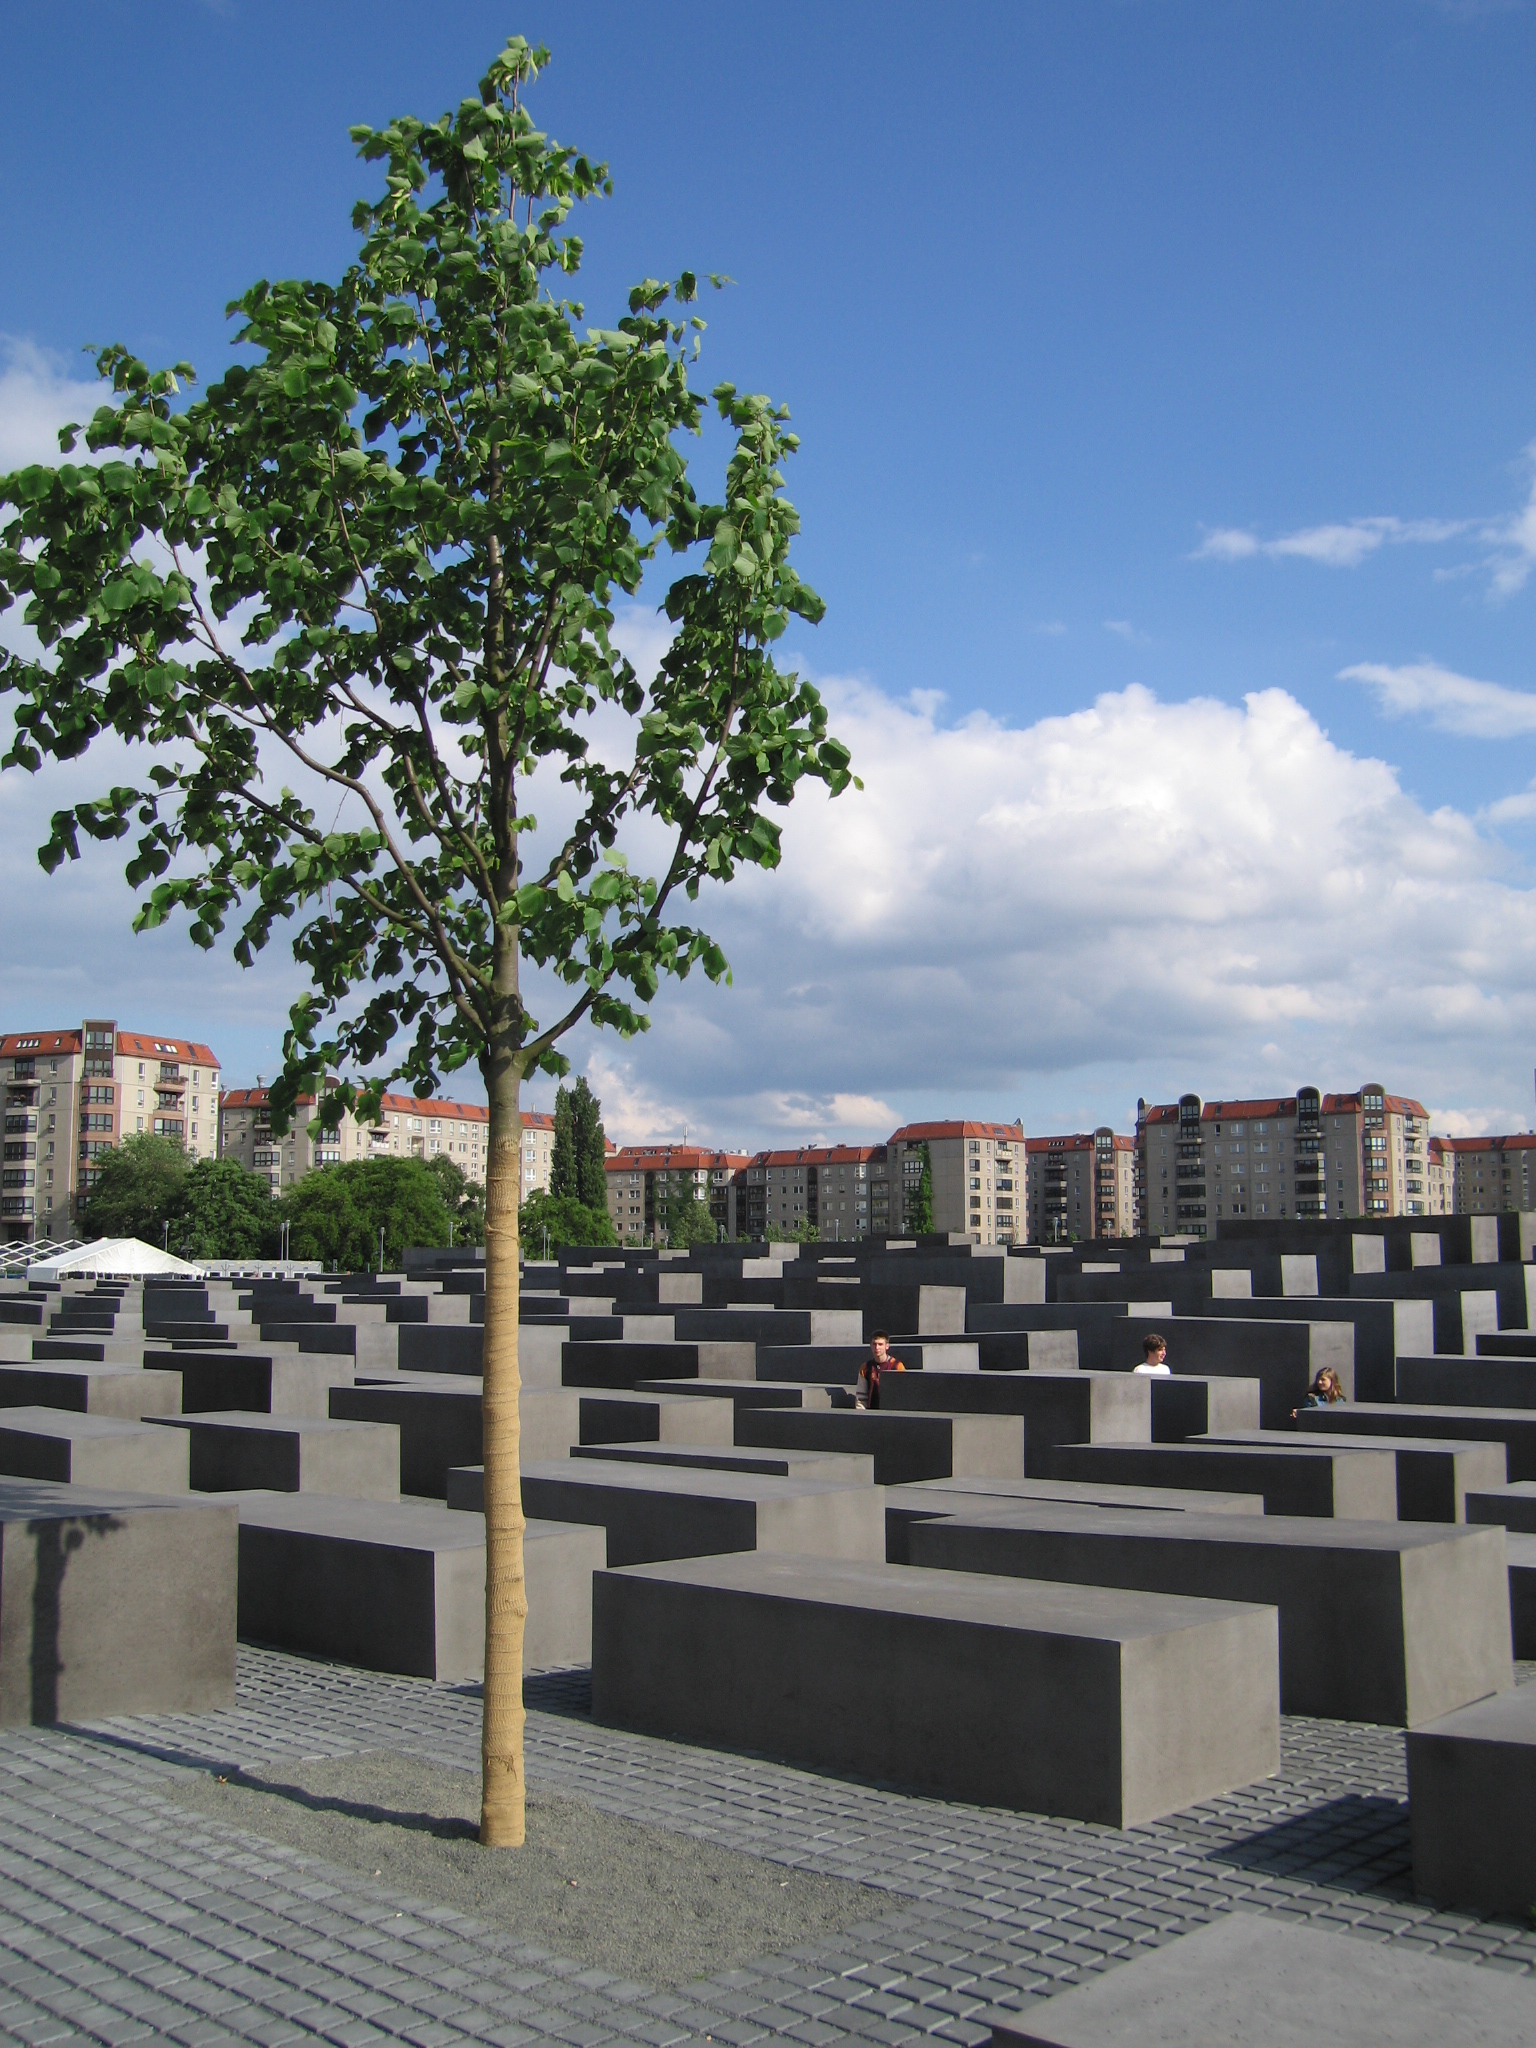 wikipedia/ The Holocaust memorial, Berlin